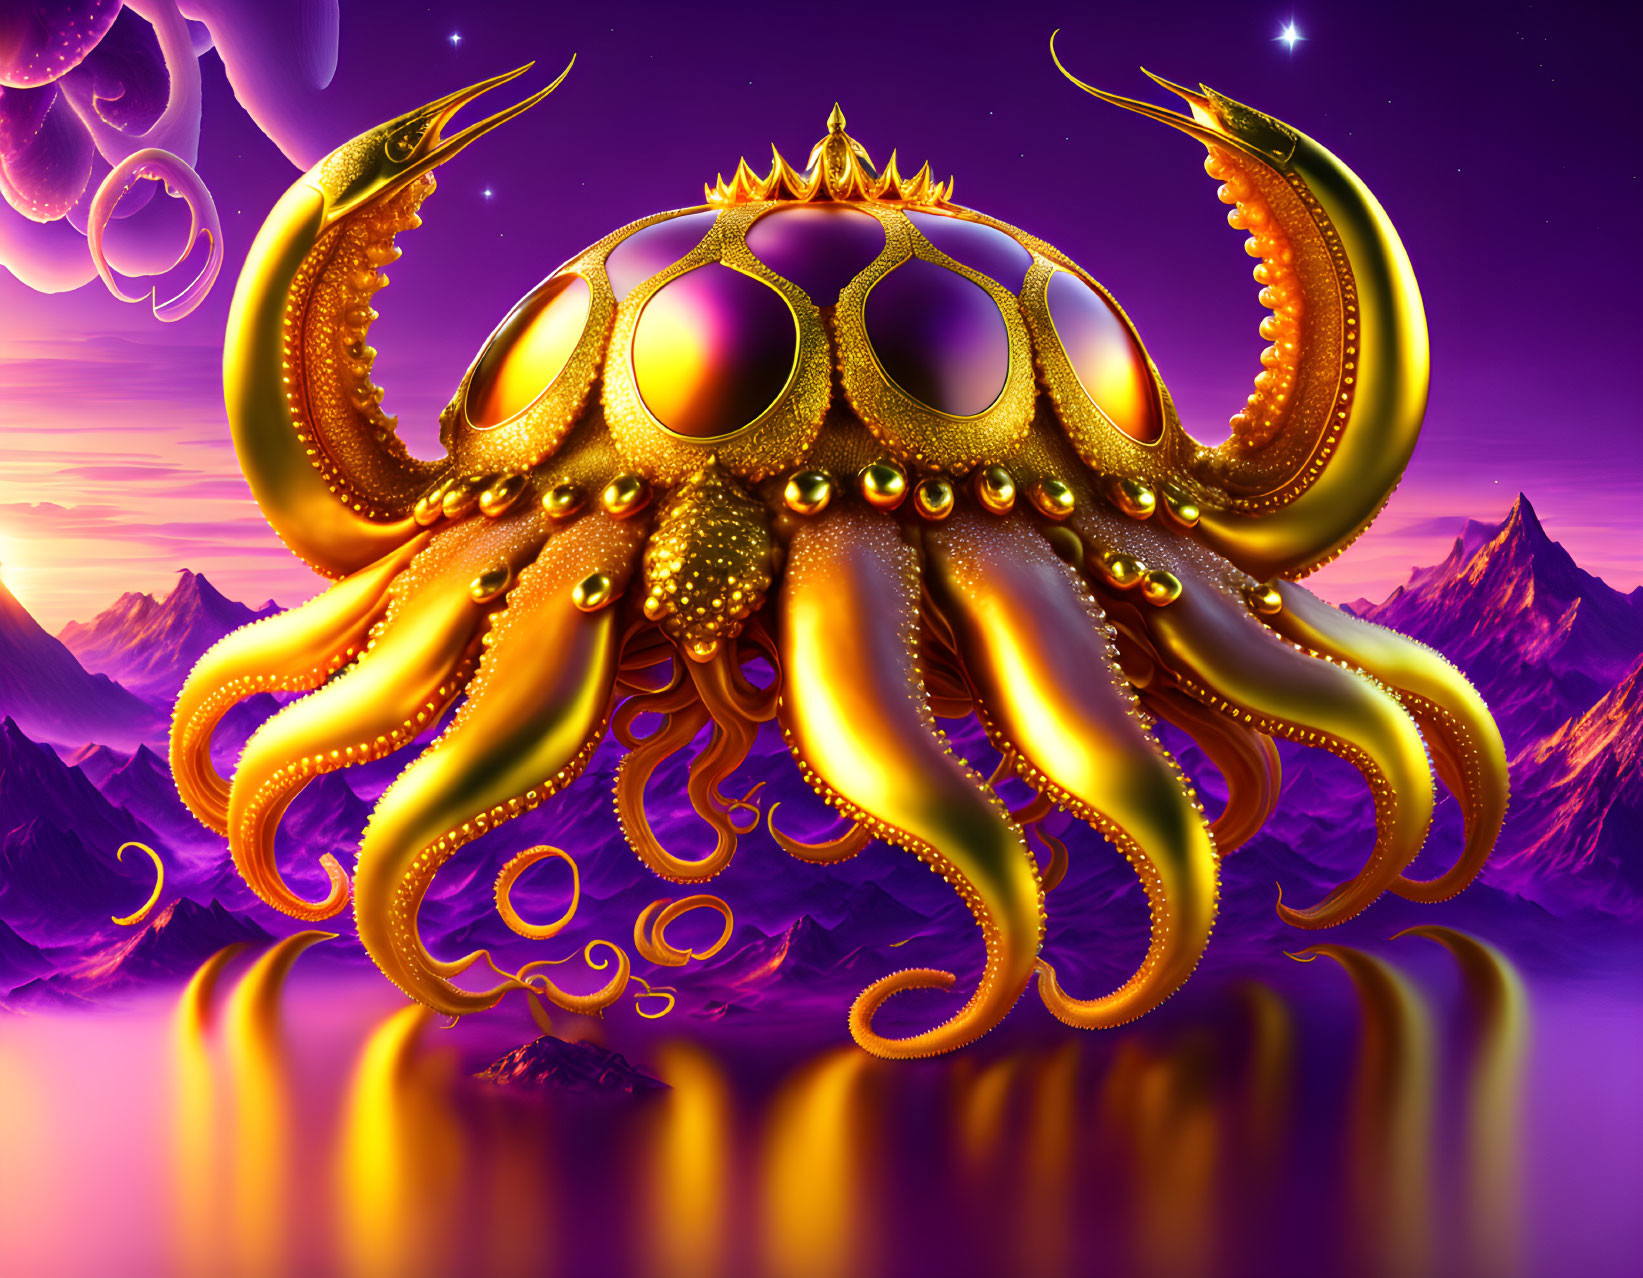 purples of octo